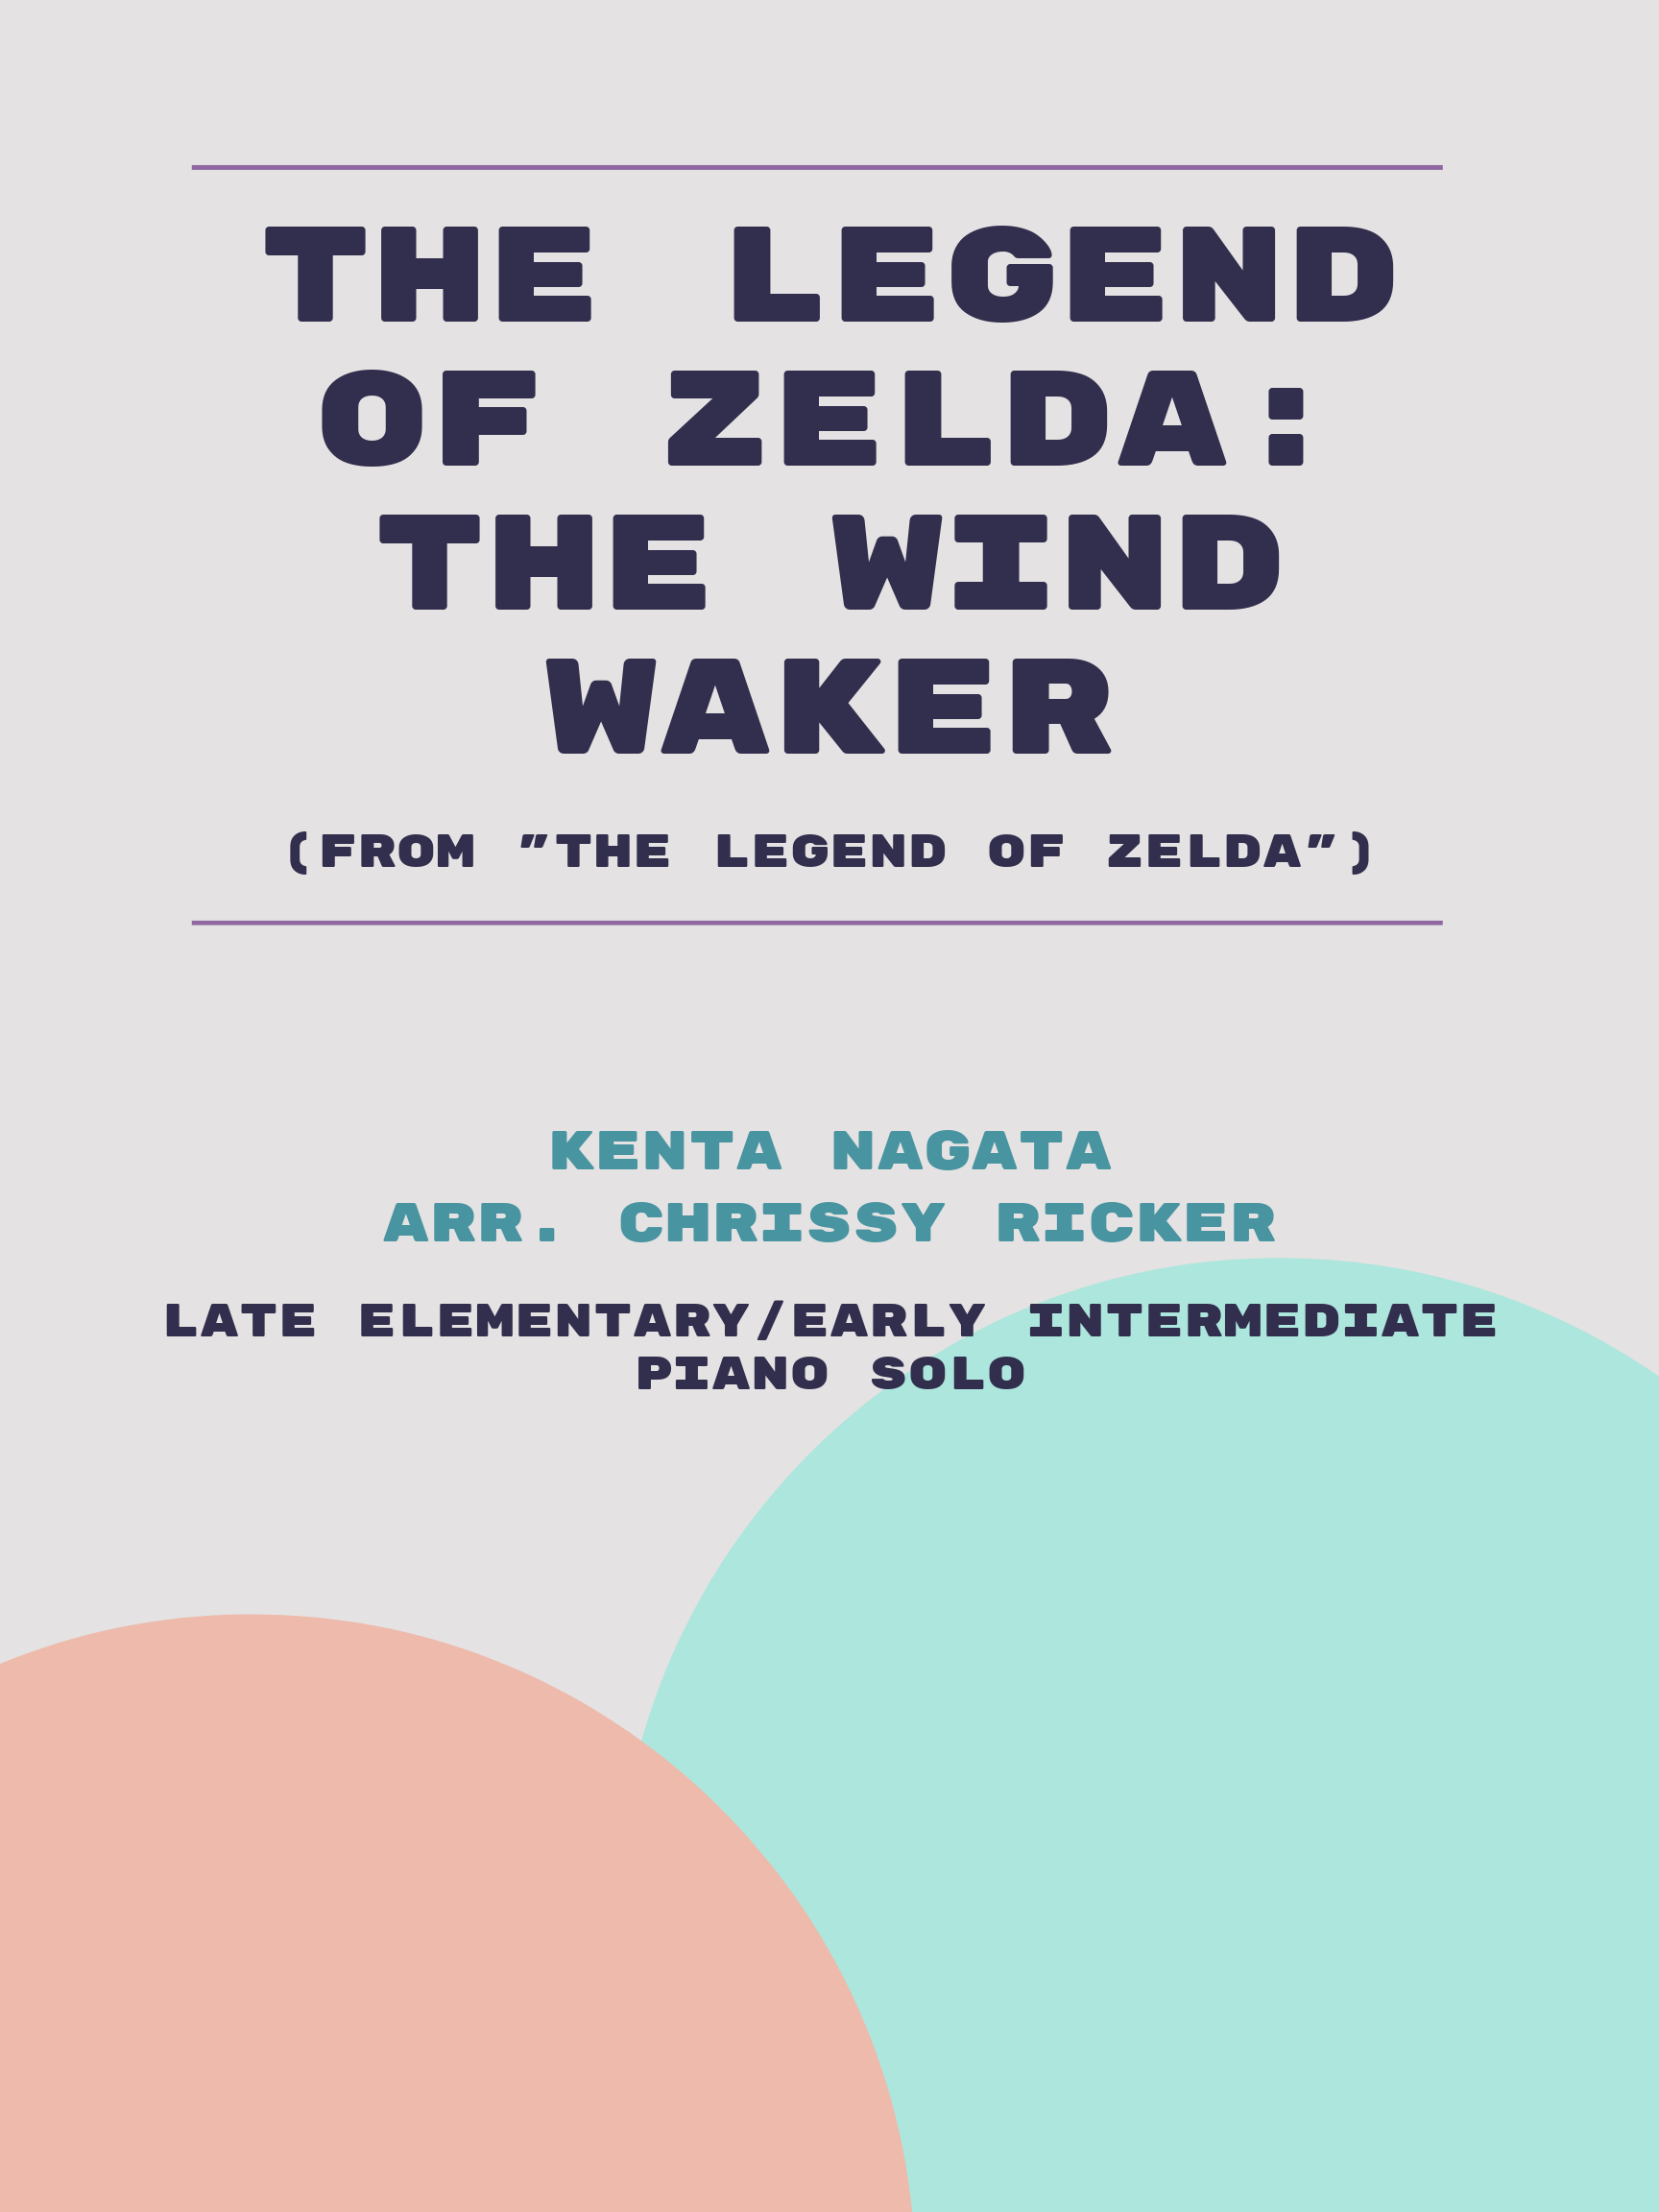 The Legend of Zelda: The Wind Waker by Kenta Nagata